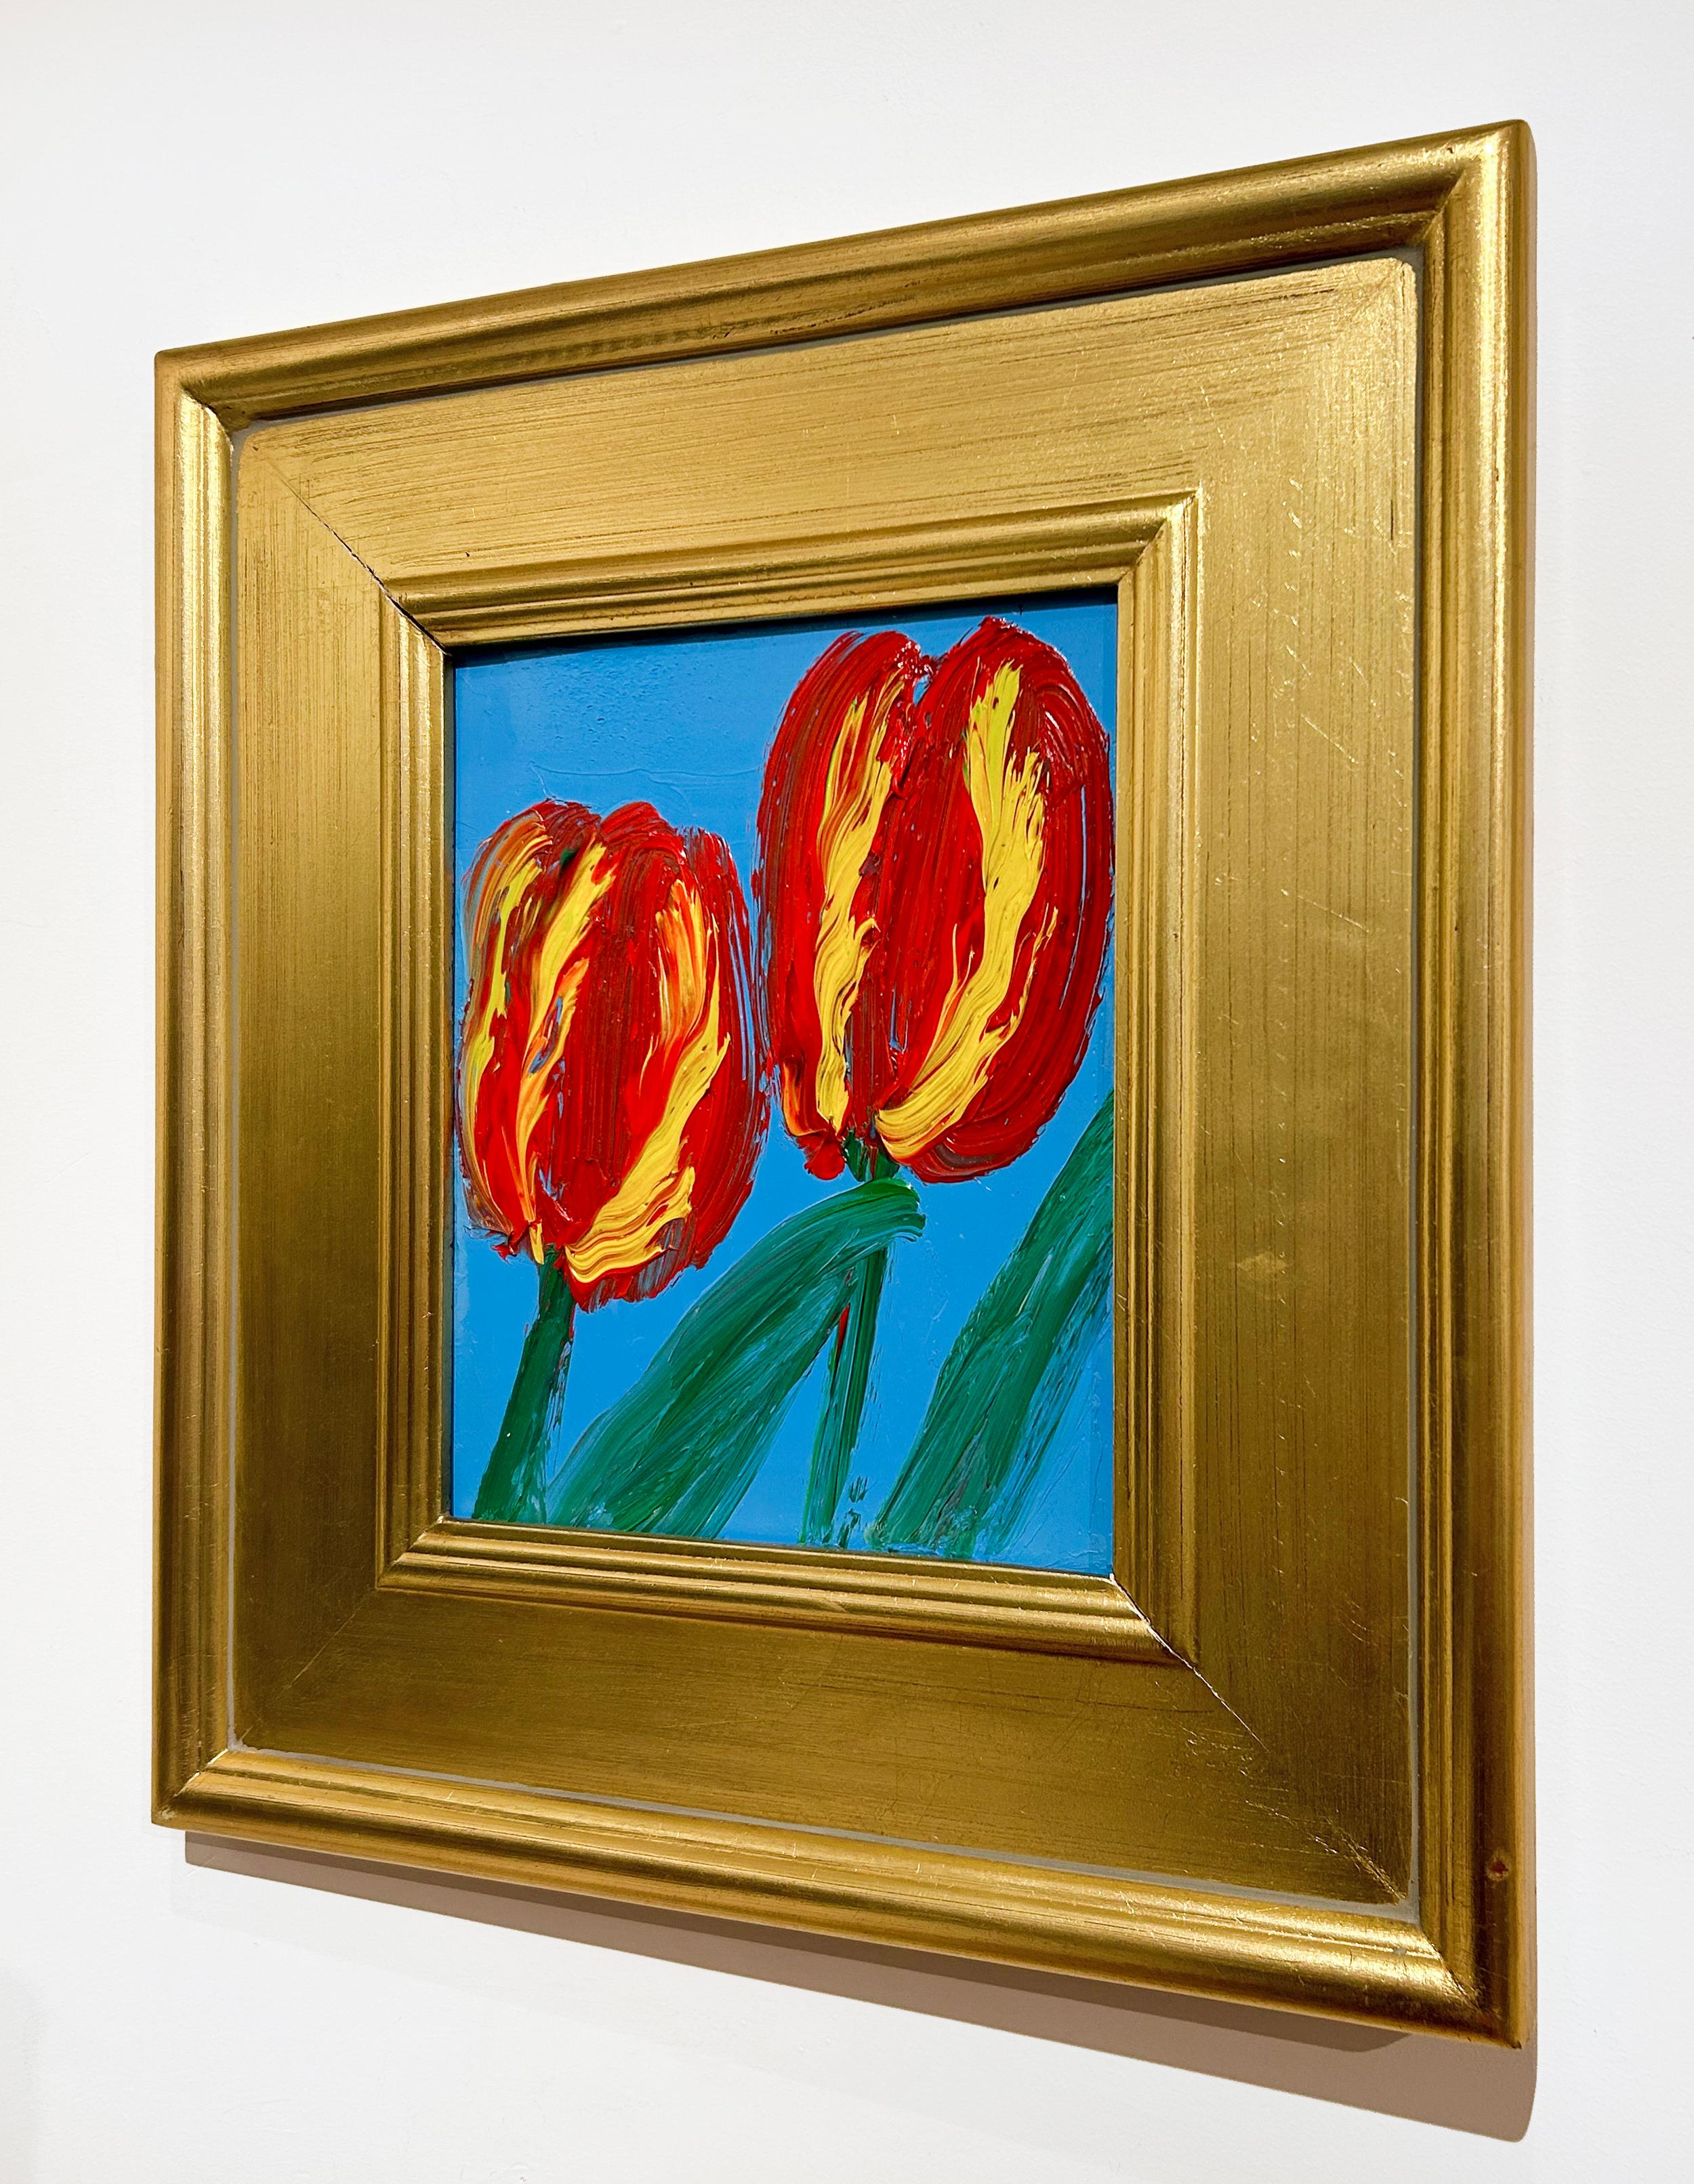 Artist:  Slonem, Hunt
Title:  2 Tulips Belle Terre
Series:  Floral
Date:  2023
Medium:  Oil on wood
Unframed Dimensions:  10